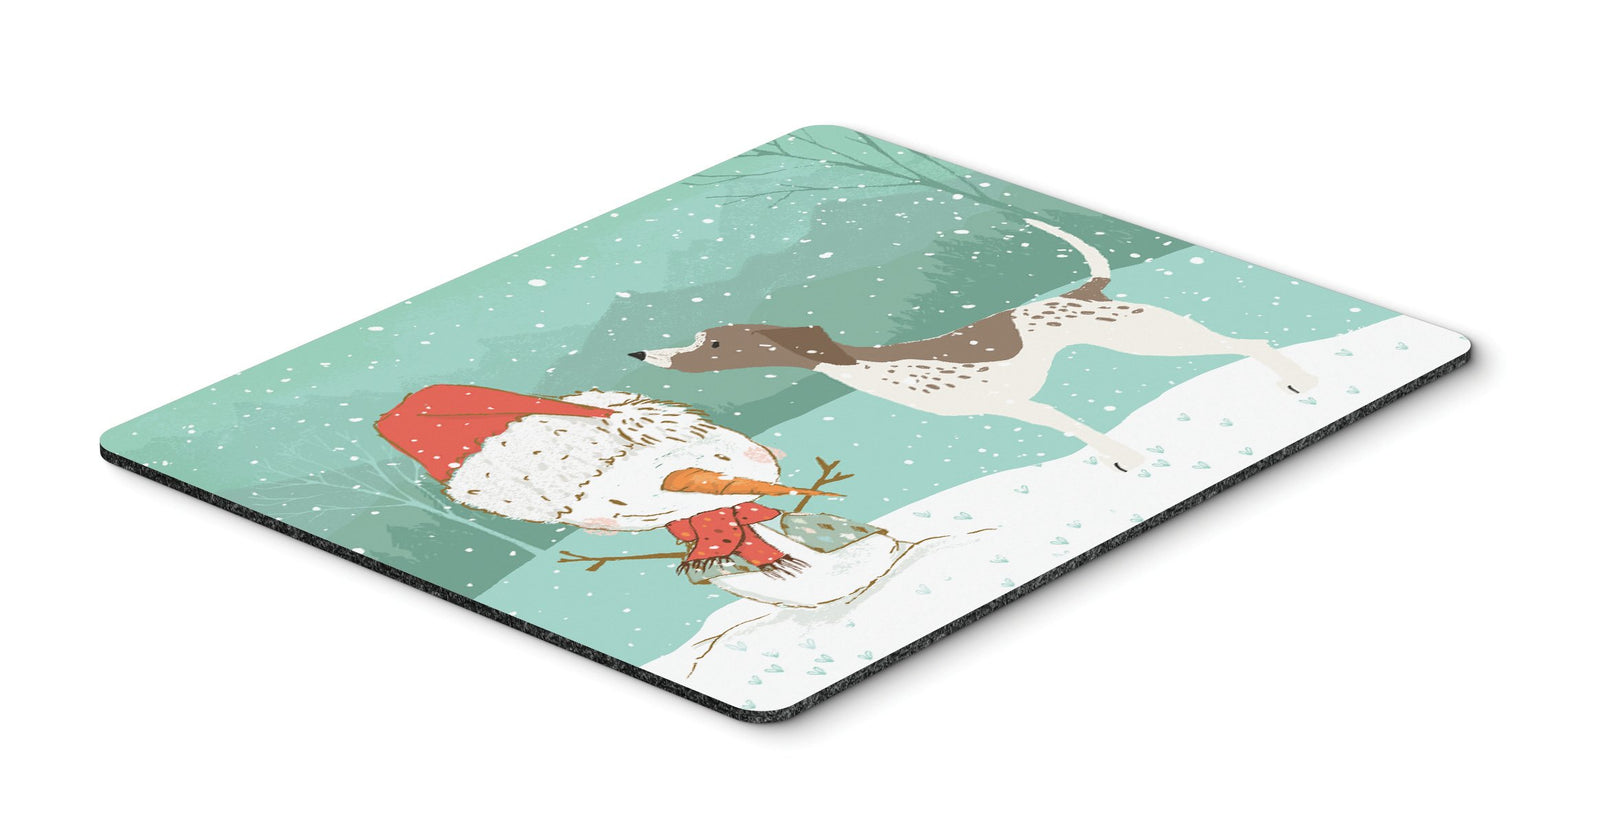 German Shorthair Snowman Christmas Mouse Pad, Hot Pad or Trivet CK2045MP by Caroline's Treasures